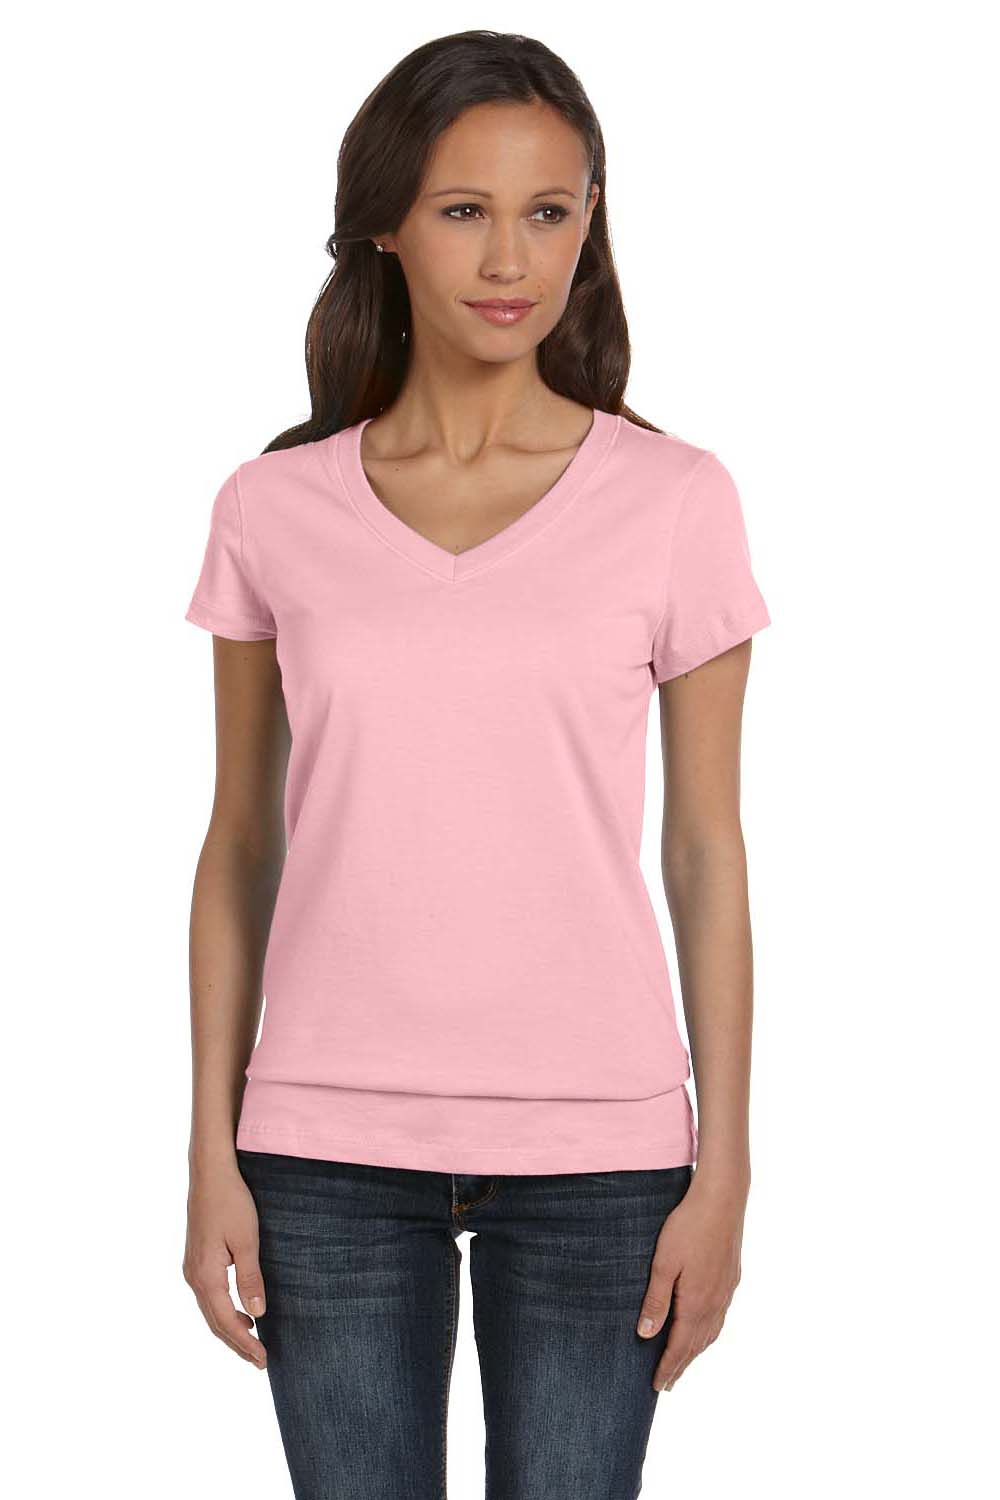 Bella + Canvas B6005/6005 Womens Jersey Short Sleeve V-Neck T-Shirt Pink Model Front